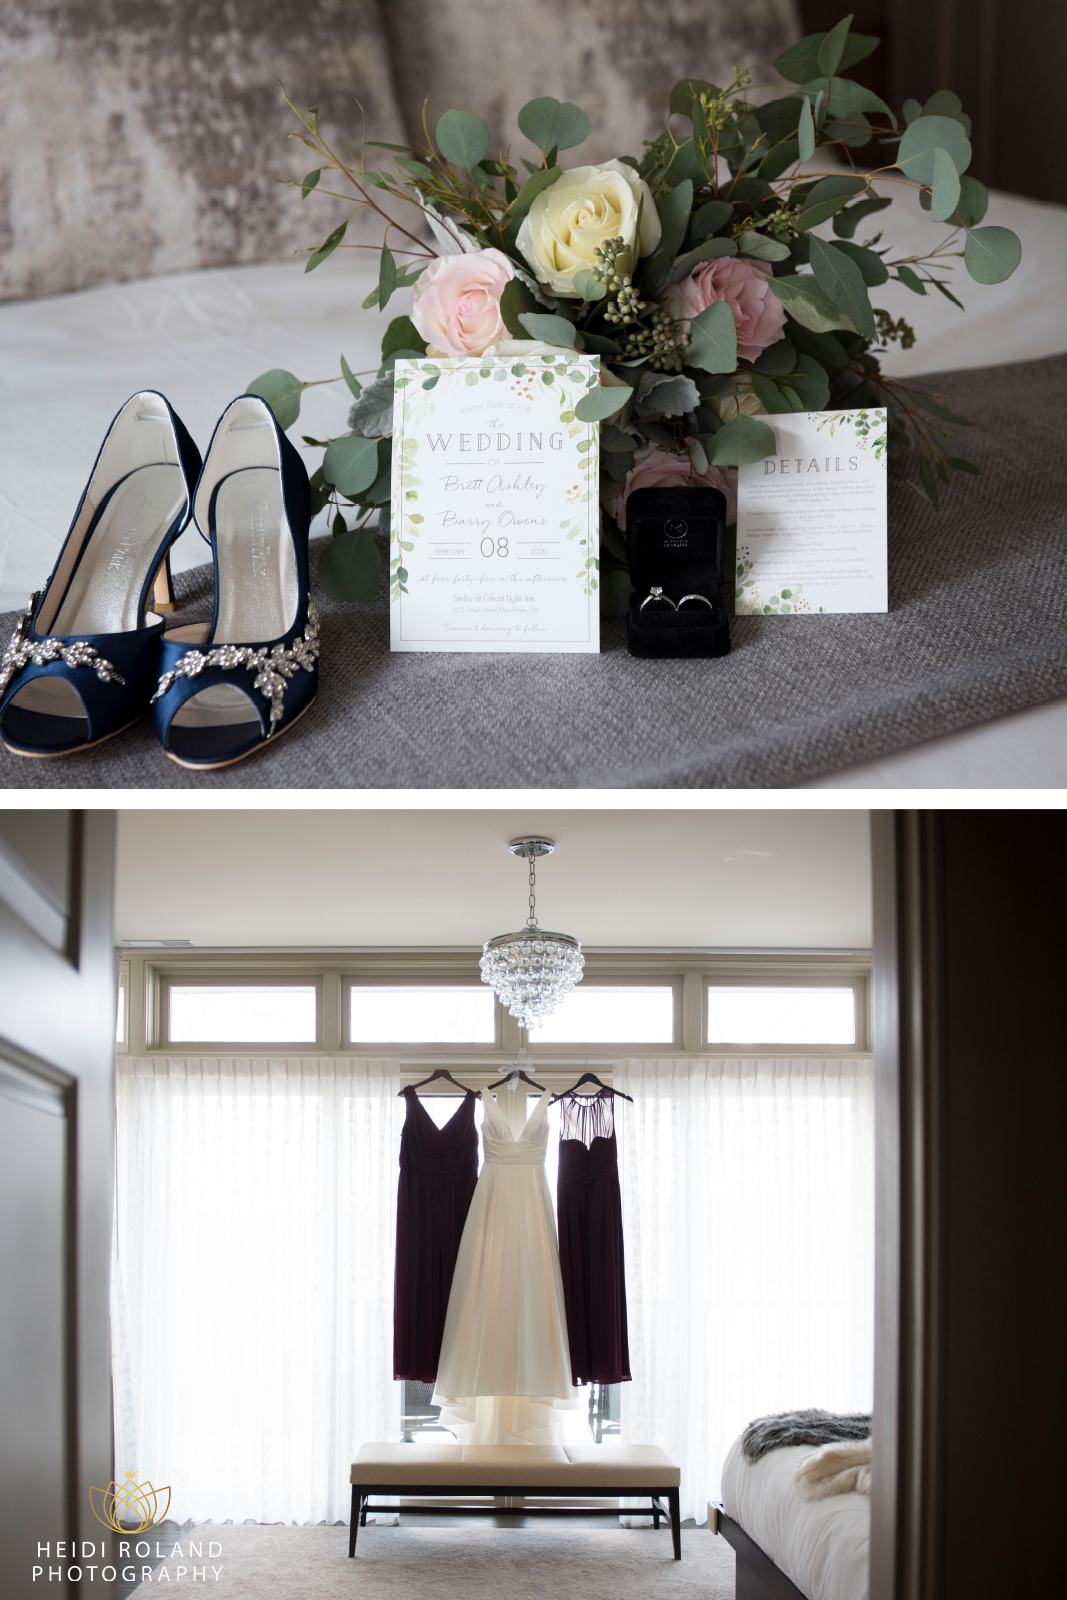 Wedding day details, blue wedding shoes